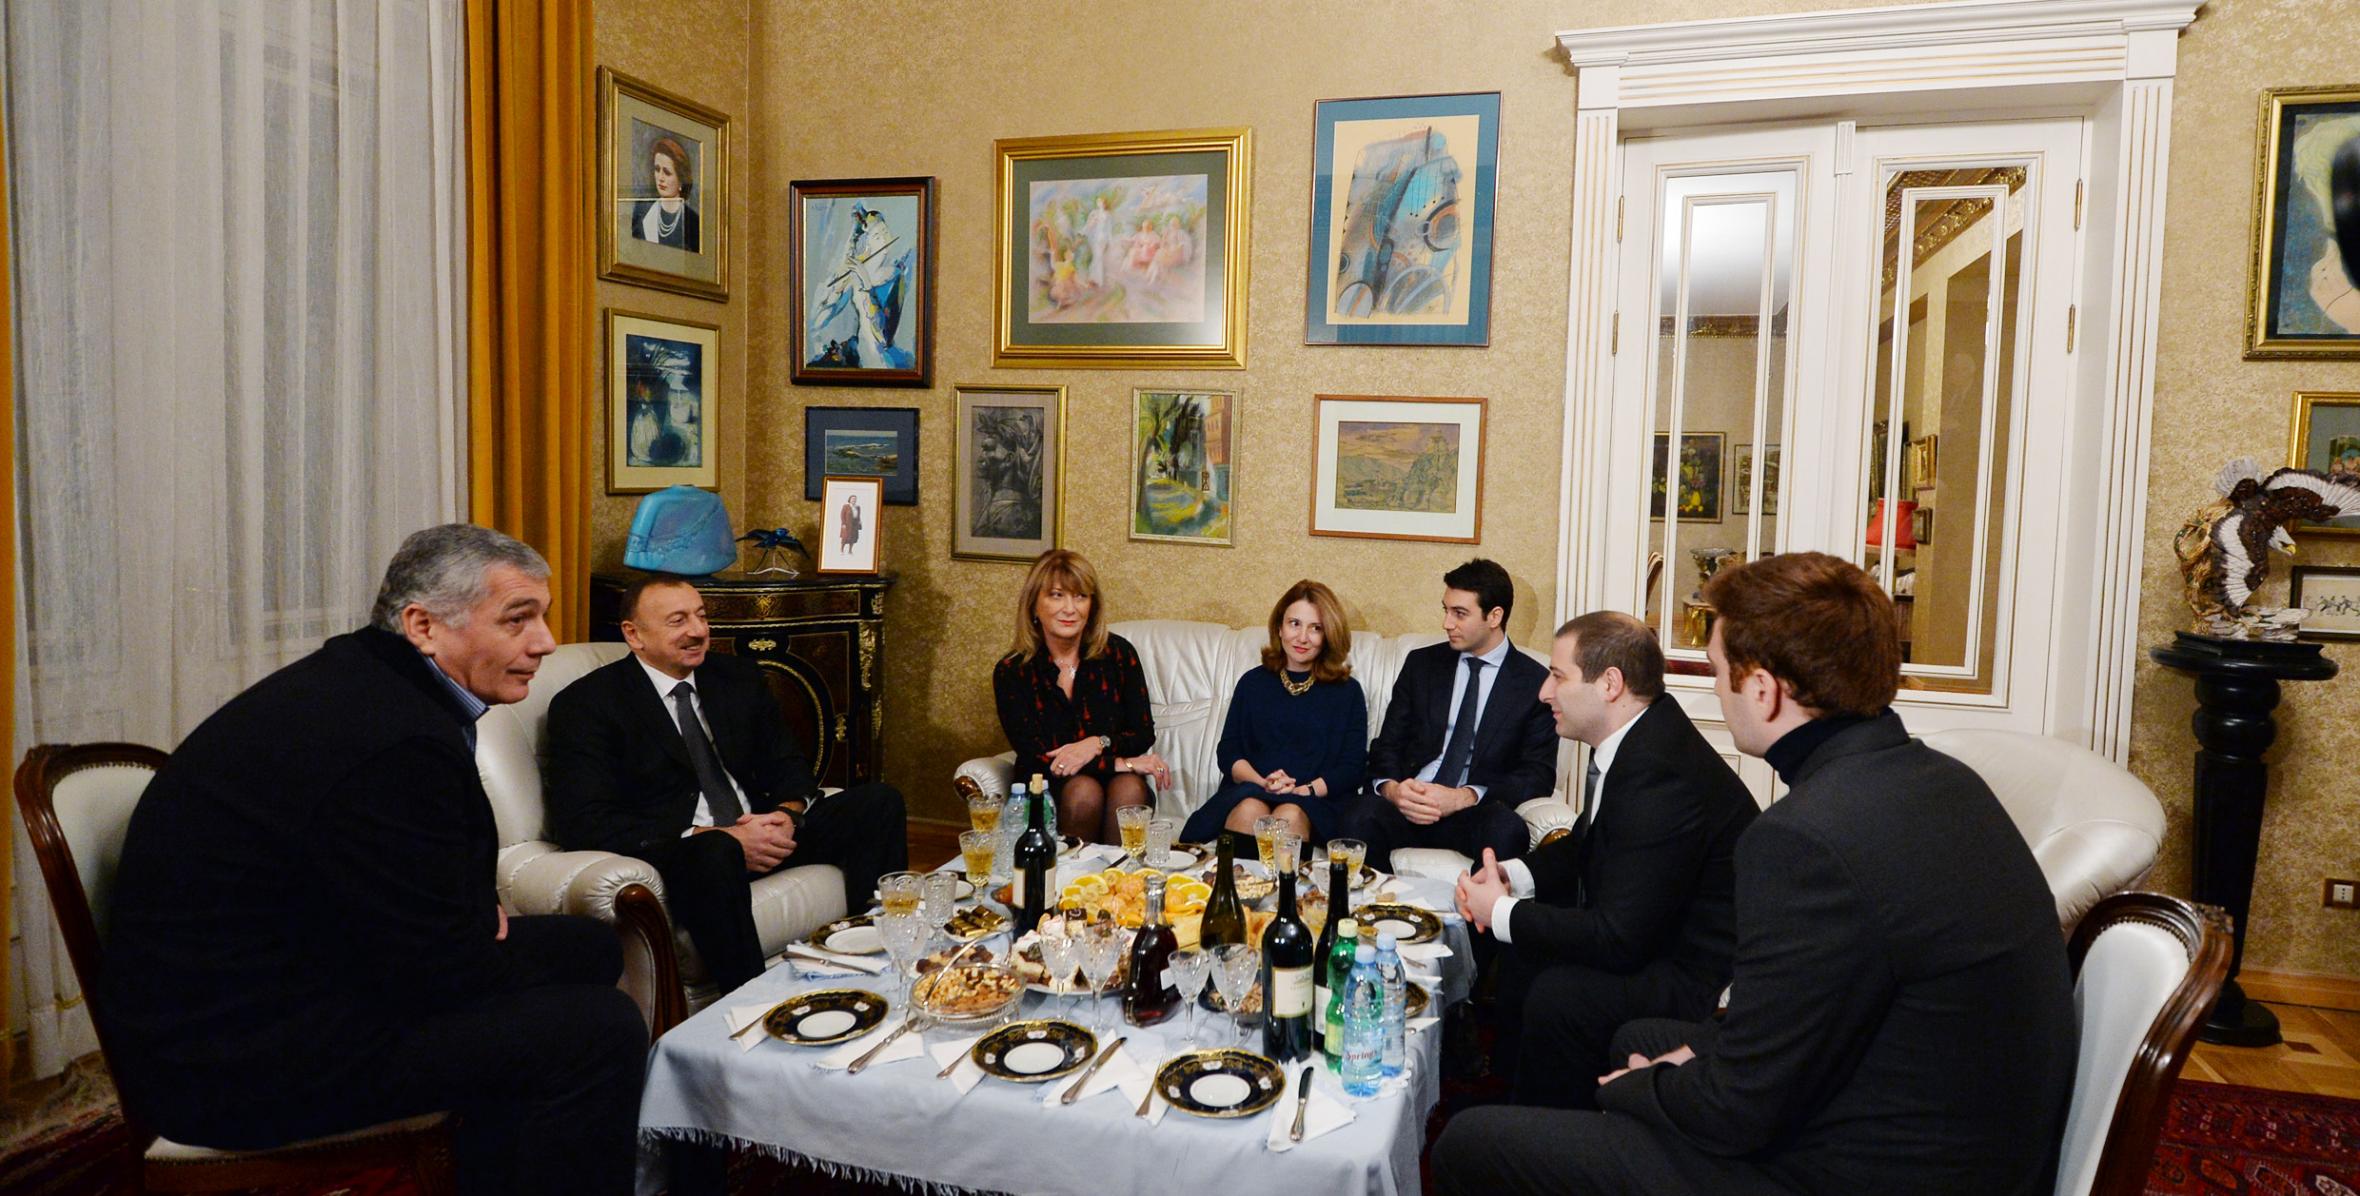 Ilham Aliyev paid tribute to late President of Georgia Eduard Shevardnadze